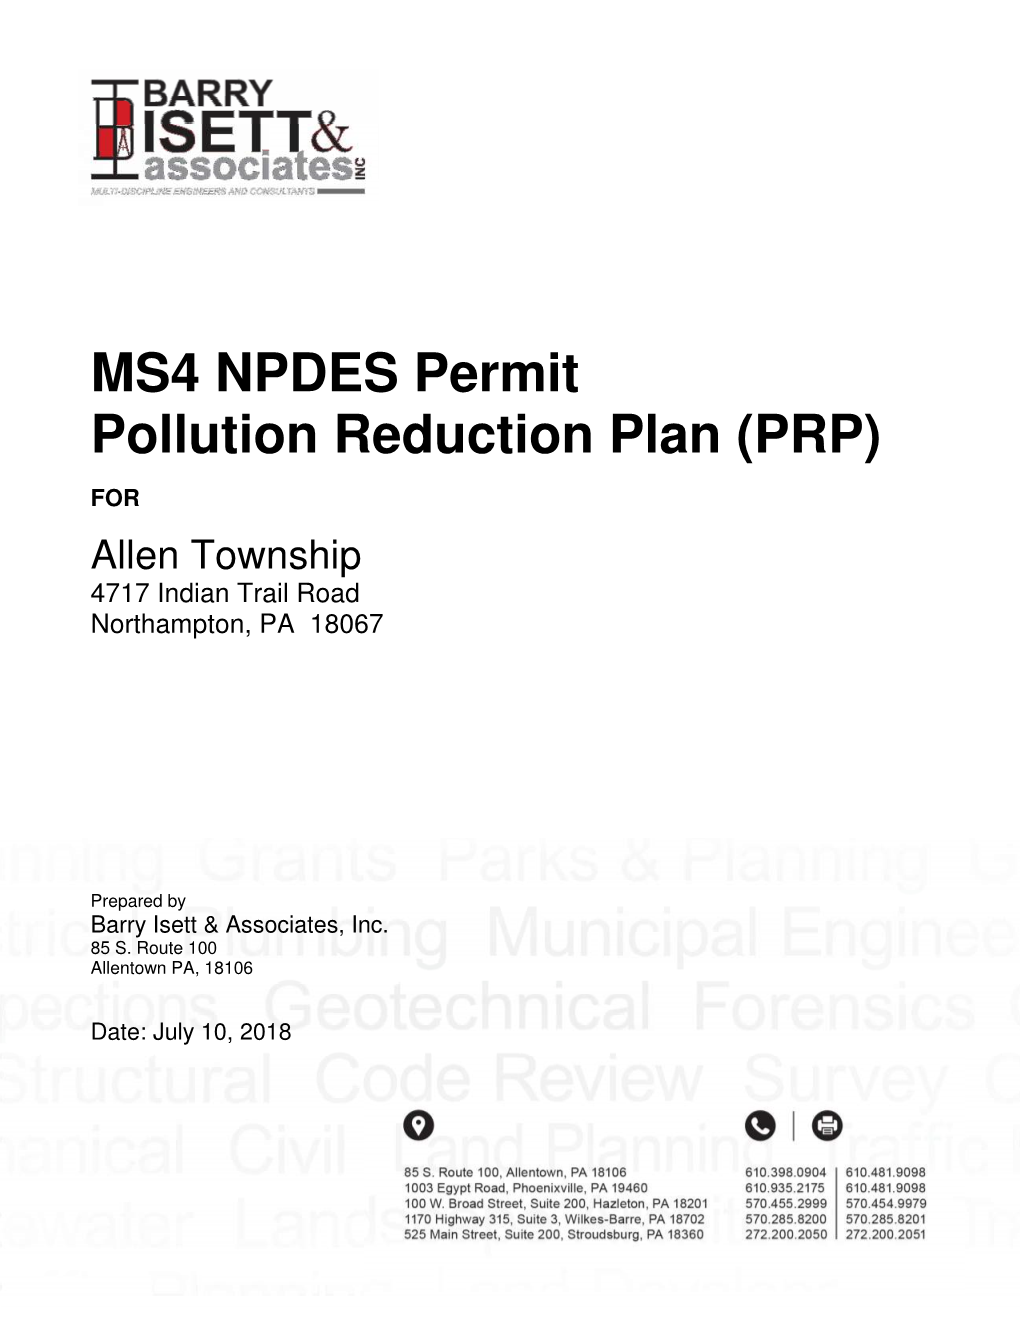 MS4 NPDES Permit Pollution Reduction Plan (PRP)